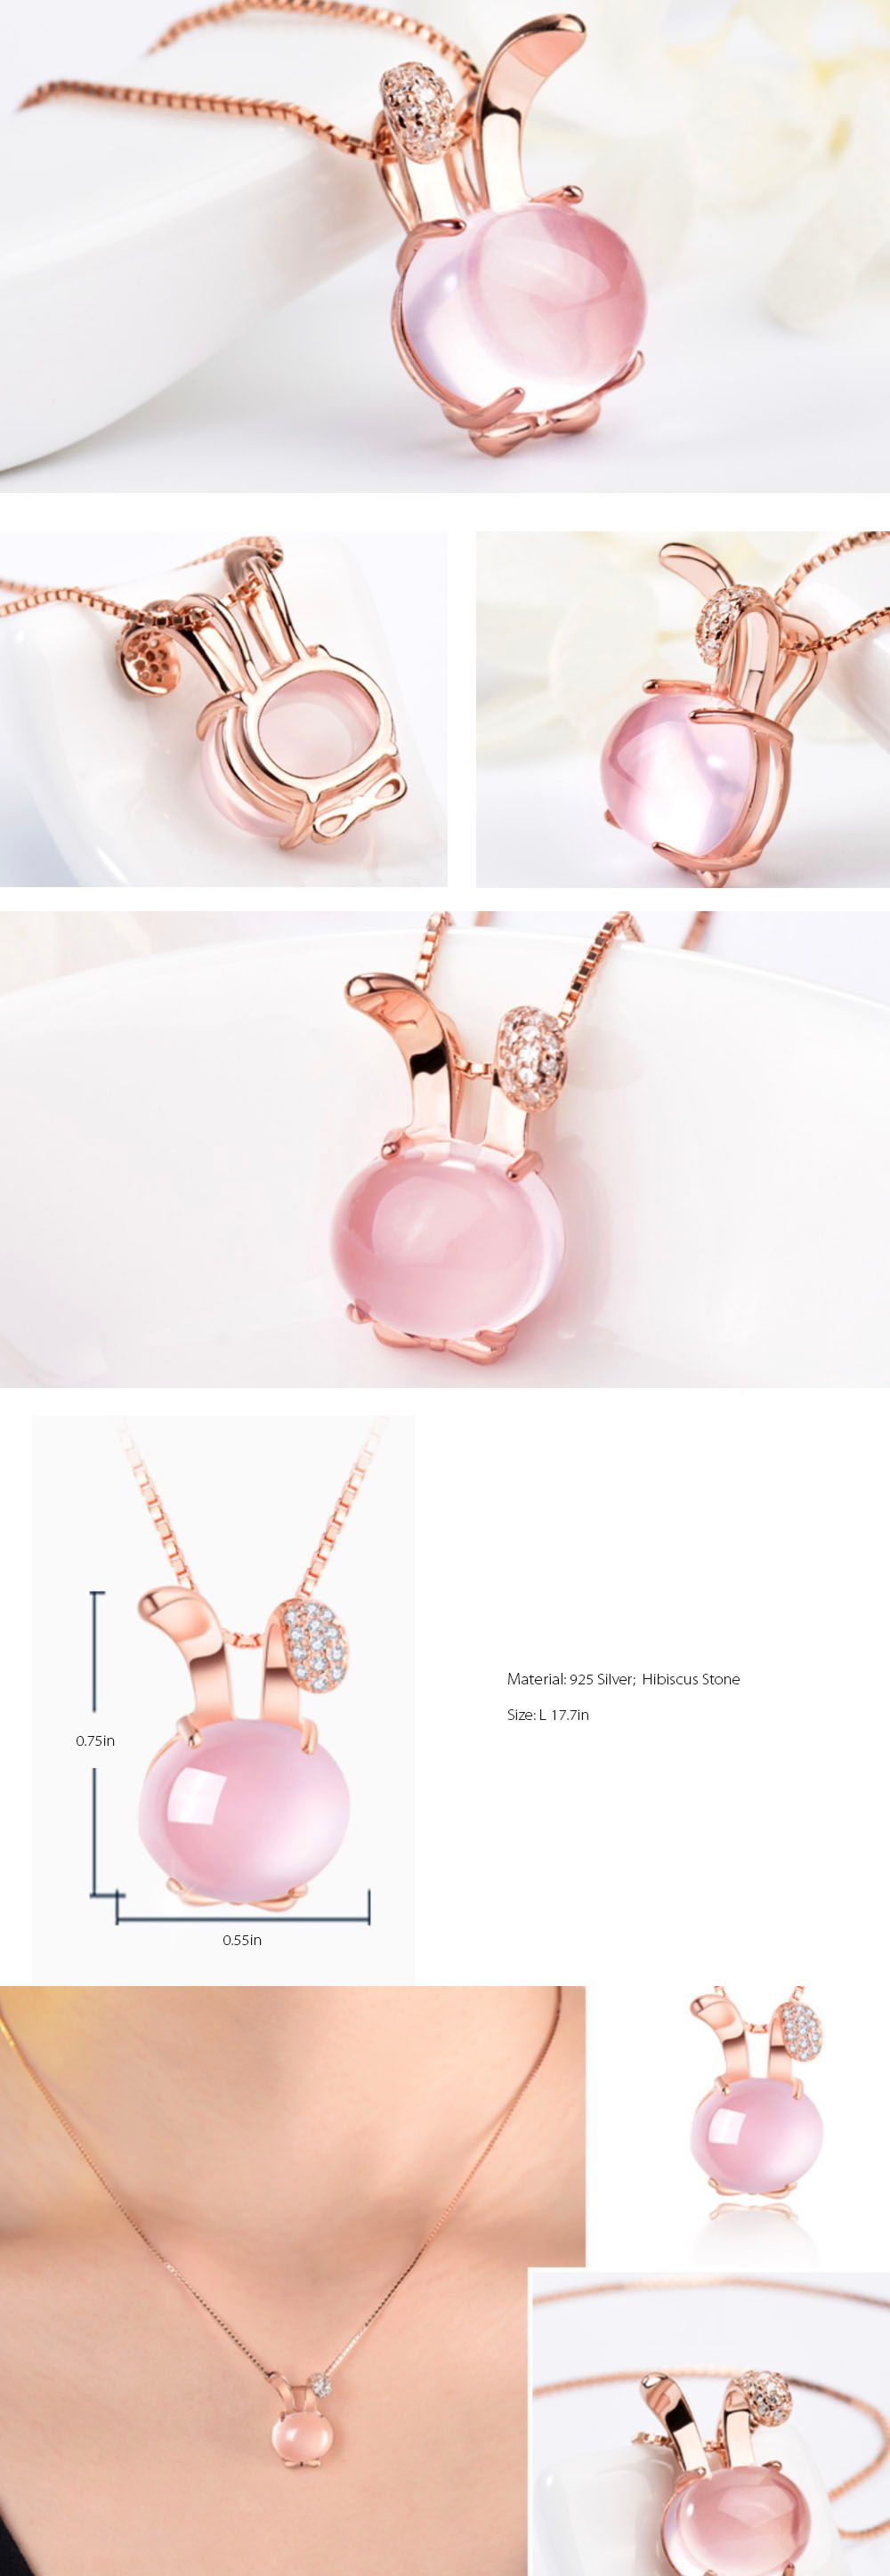 Pink Bunny Necklace - ApolloBox